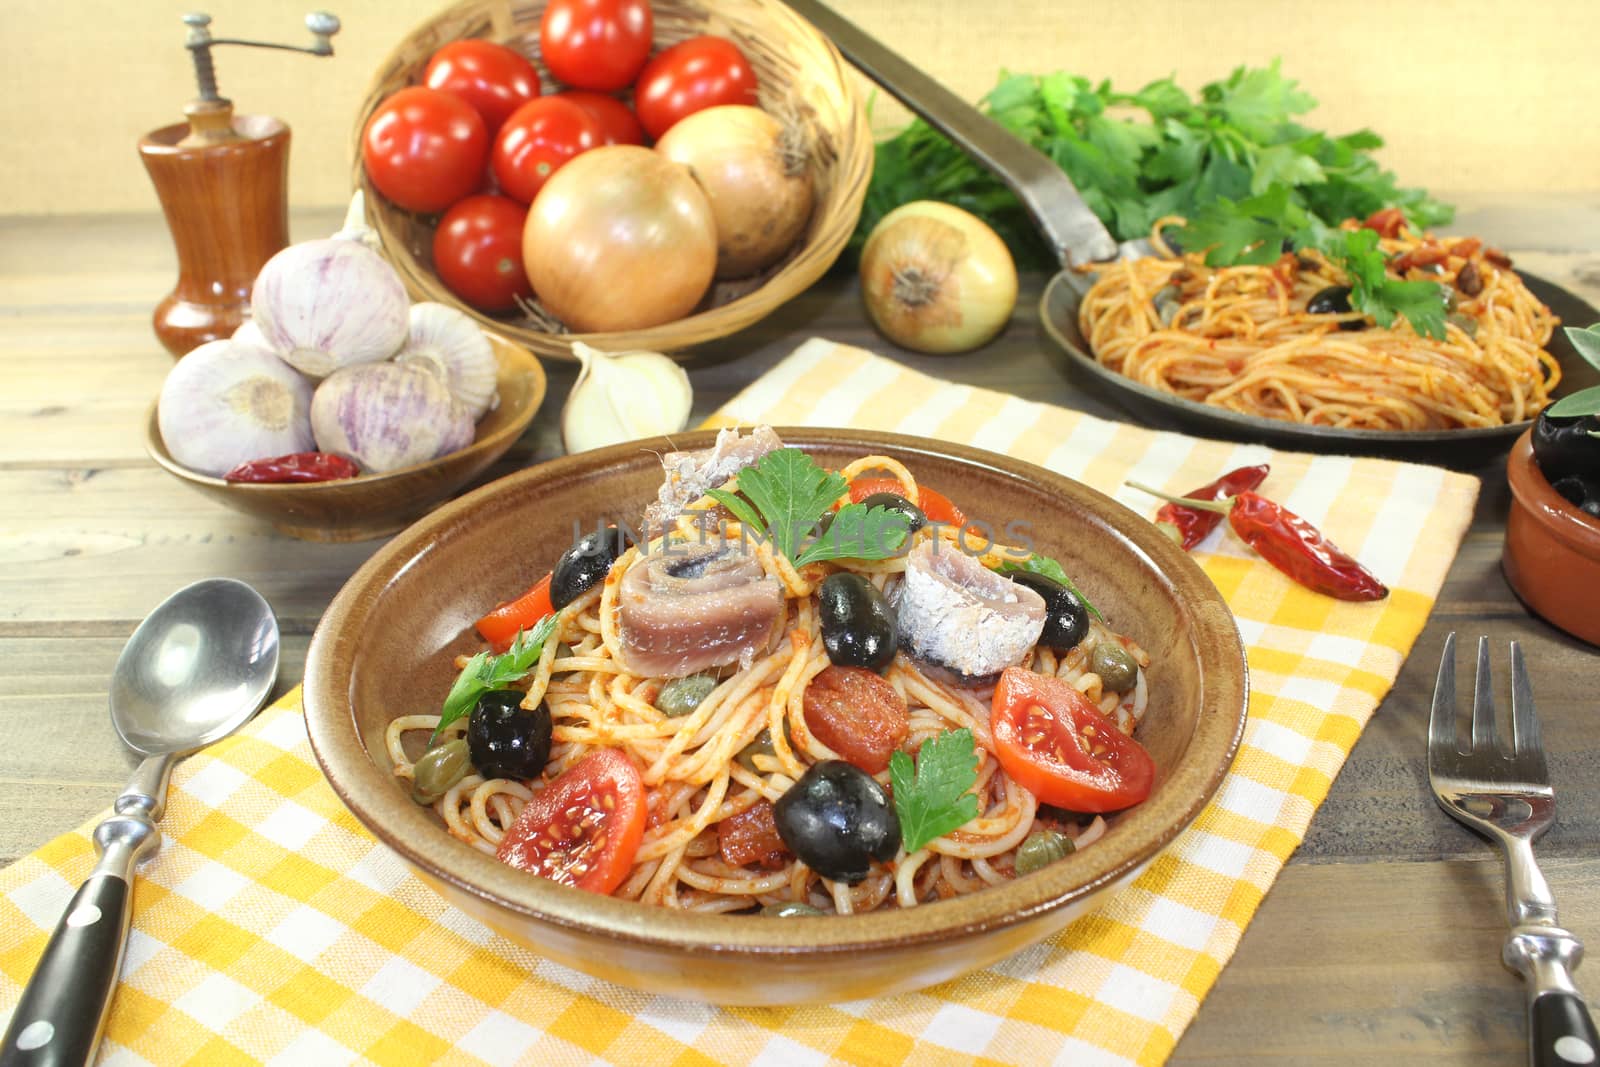 Spaghetti alla puttanesca with capers and tomatoes on a napkin